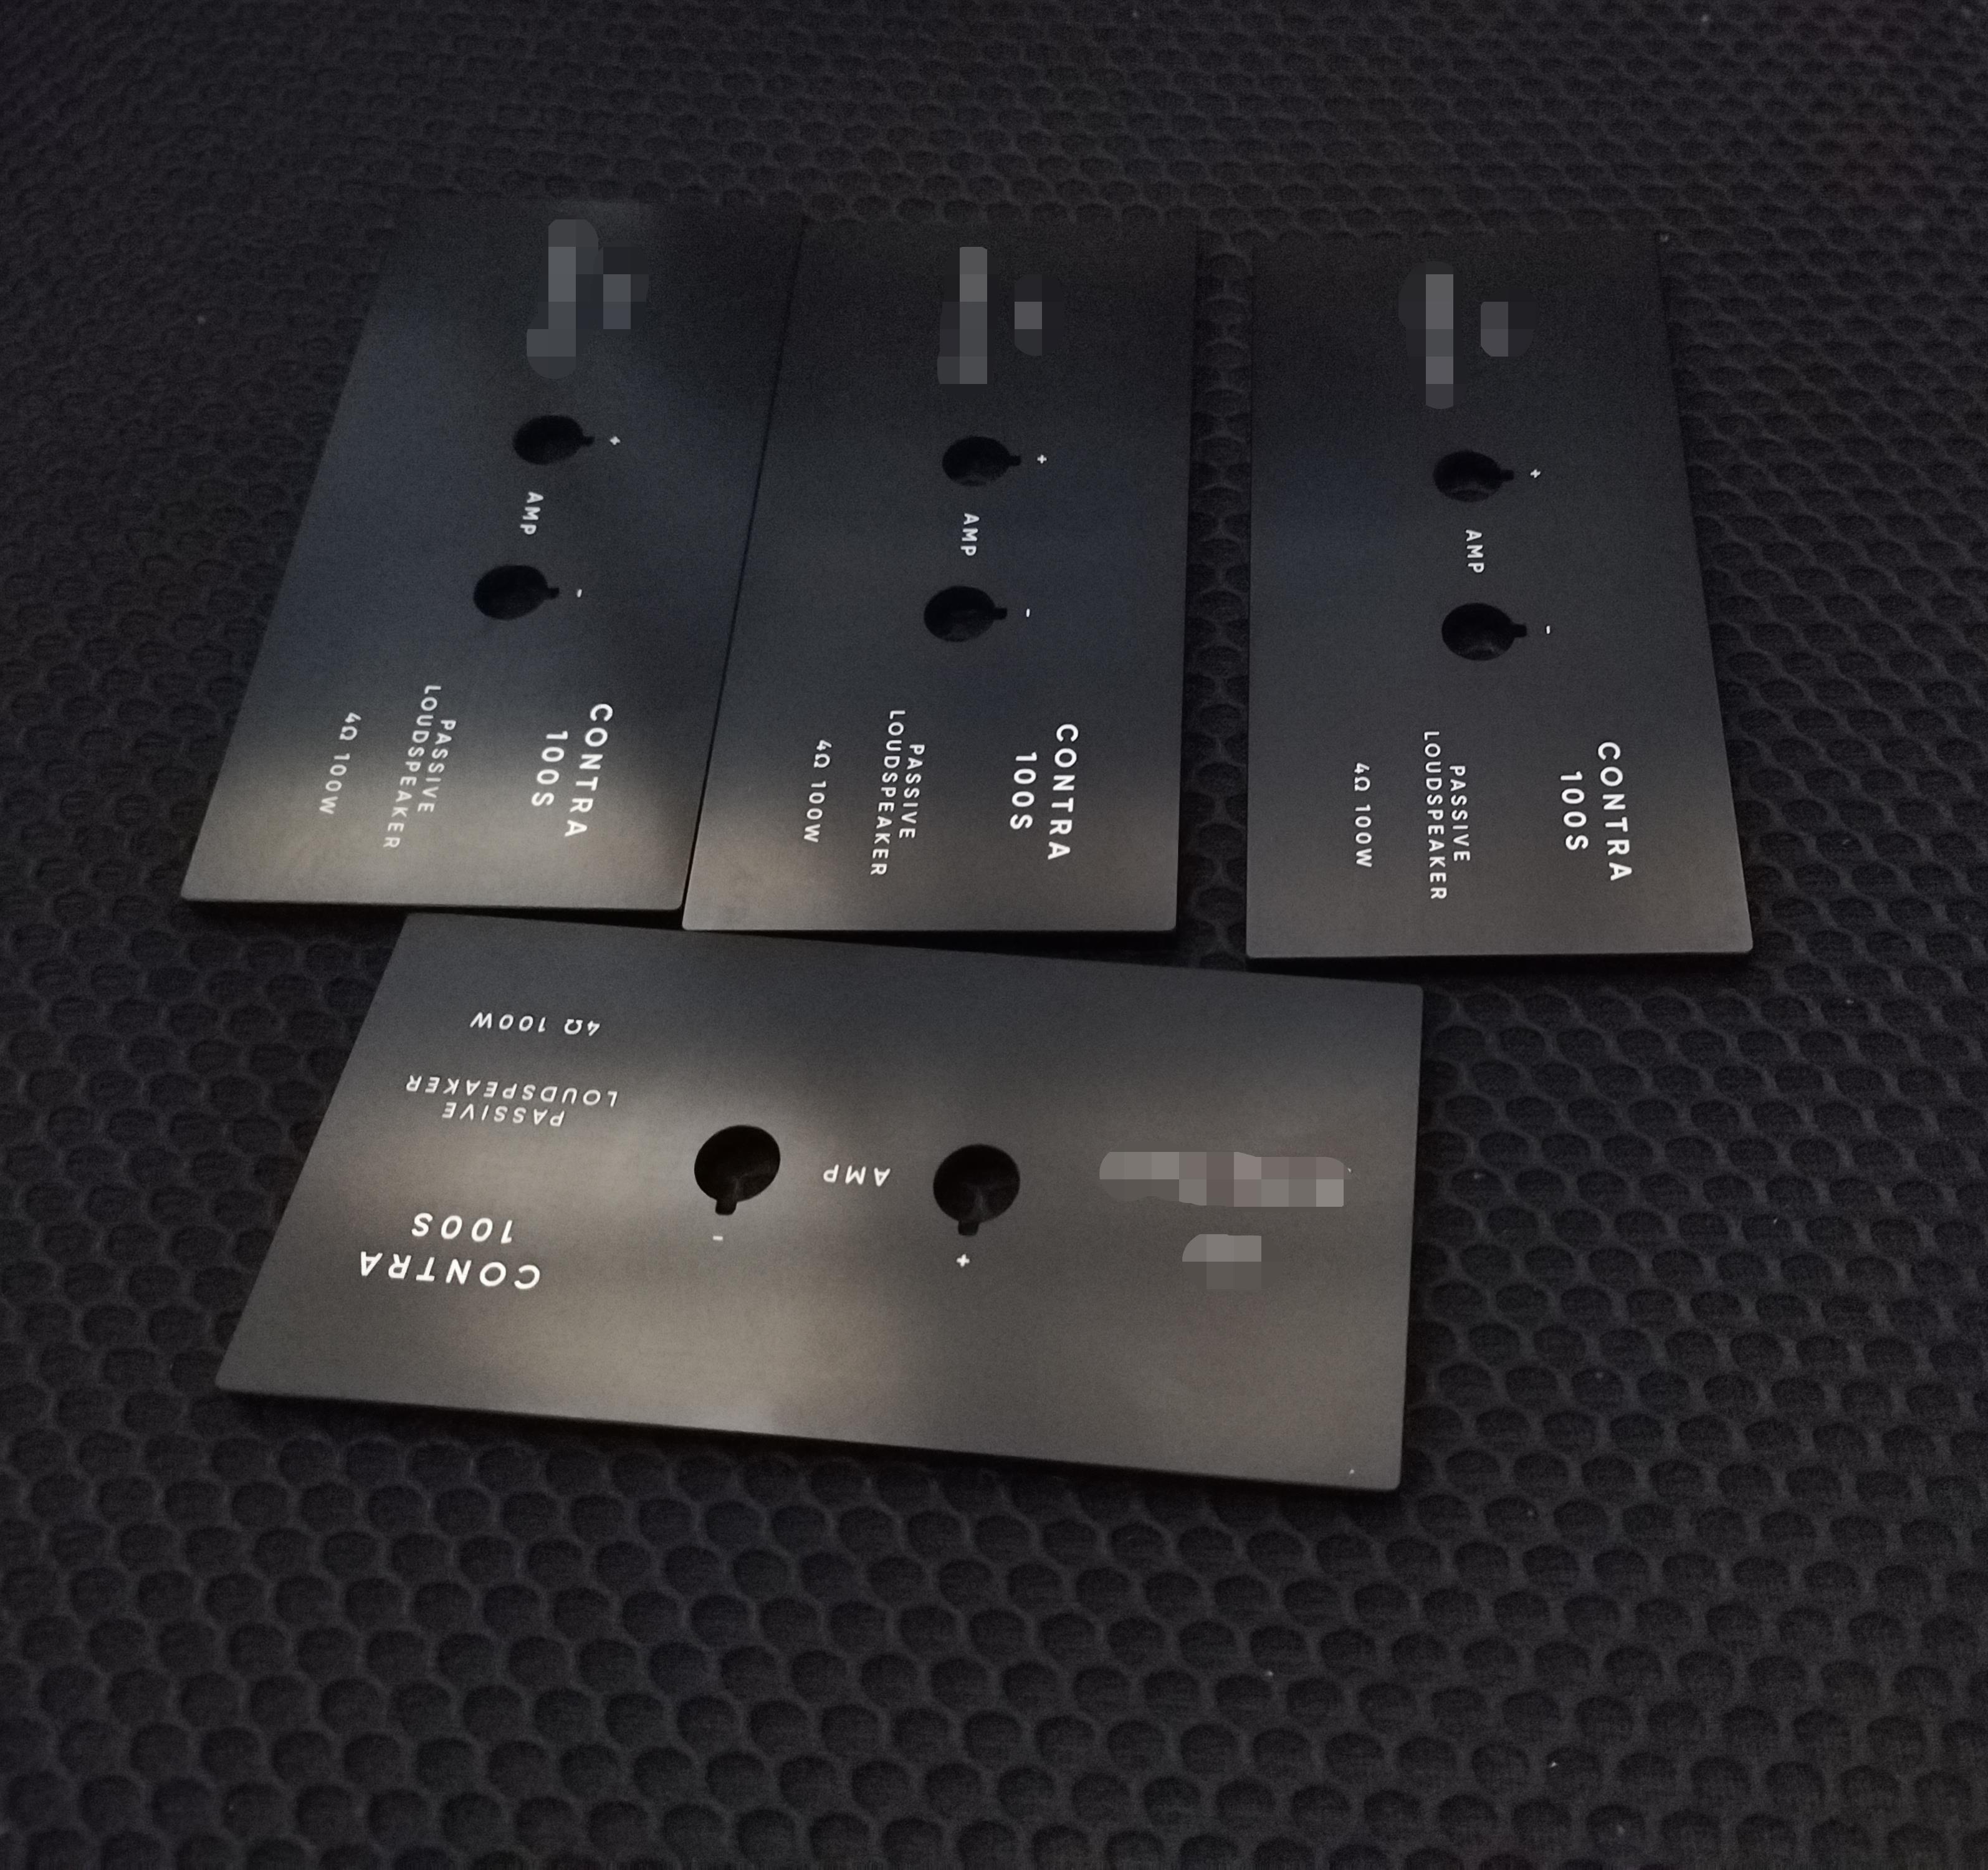 Matt black anodised 6mm aluminum plate milling components for loudspeakers